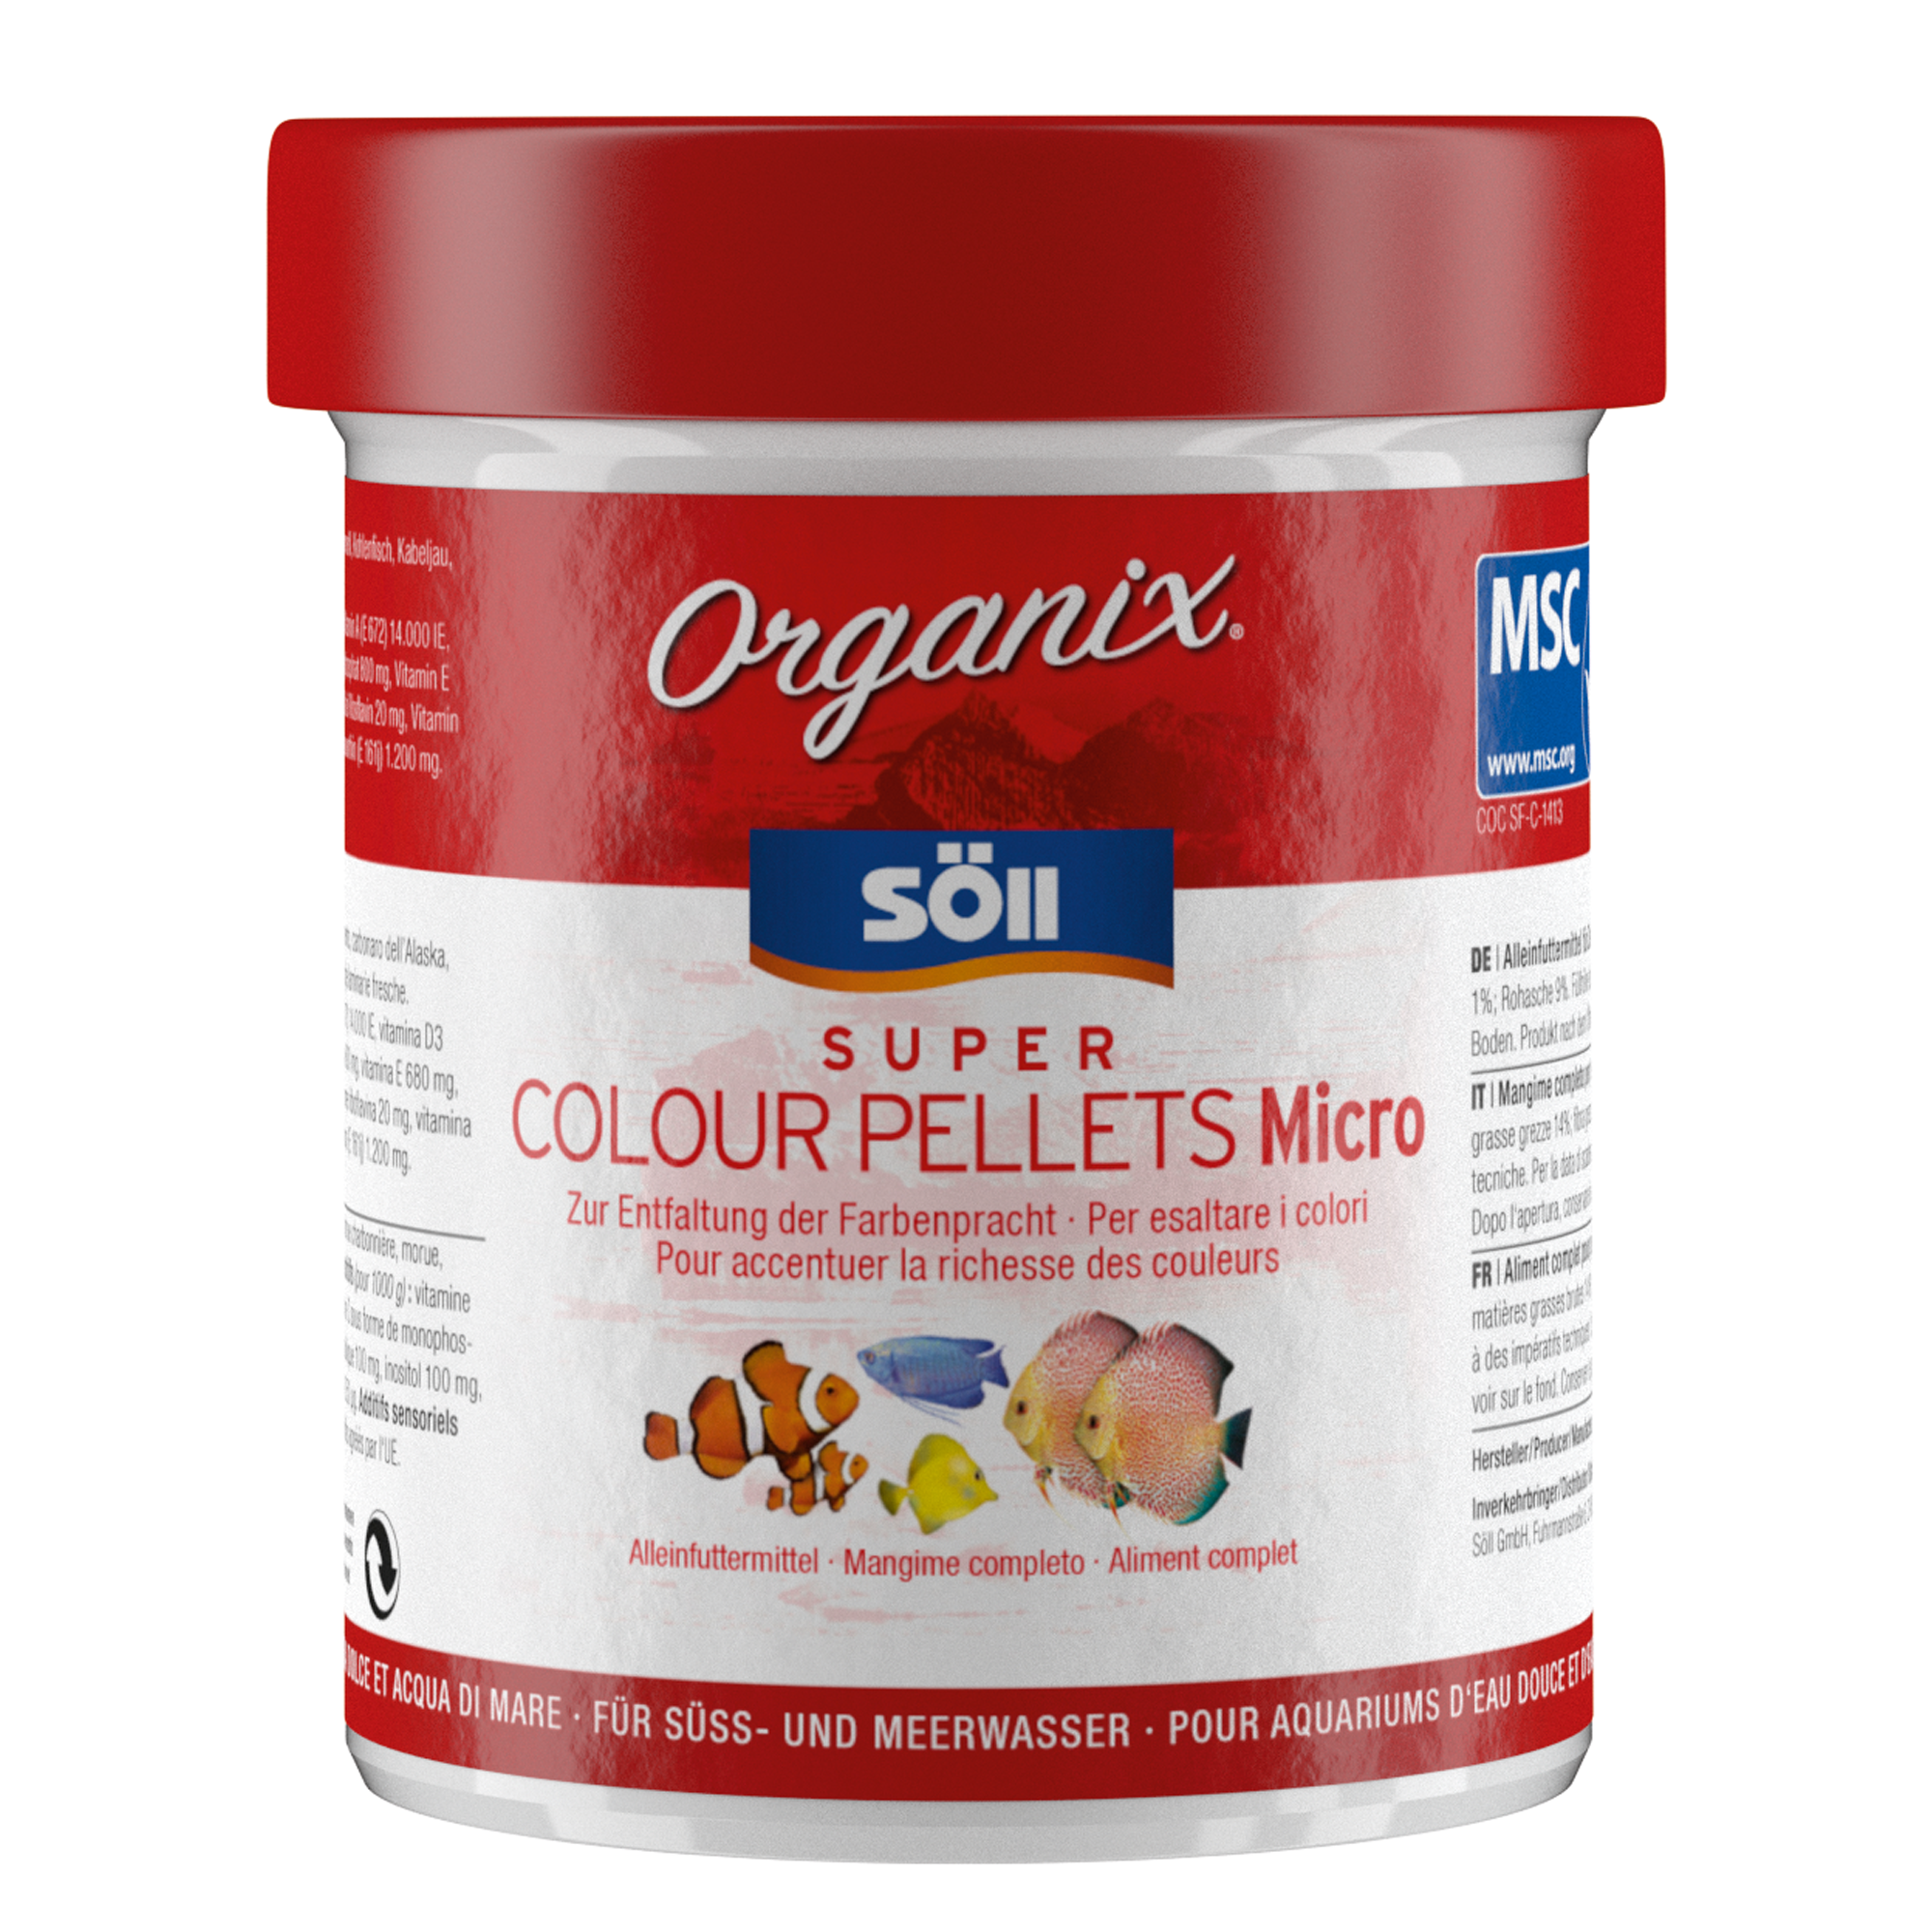 Organix Super Colour Pellets Micro 130 ml + product picture